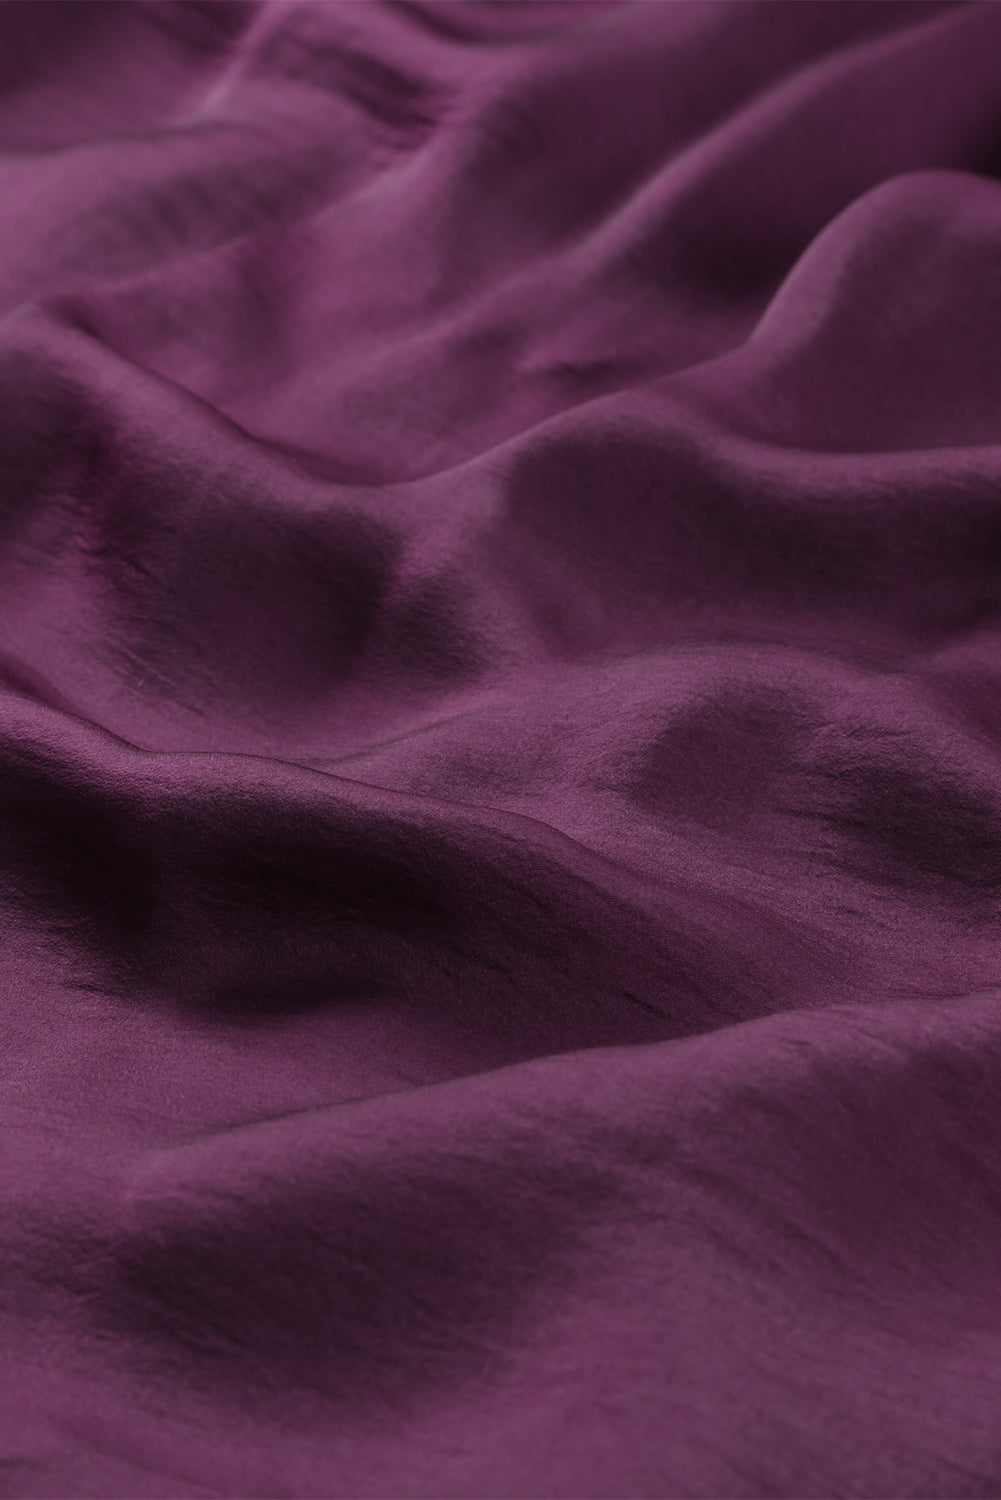 Purple Buttoned Sheer Lace Back Long Sleeve Dress